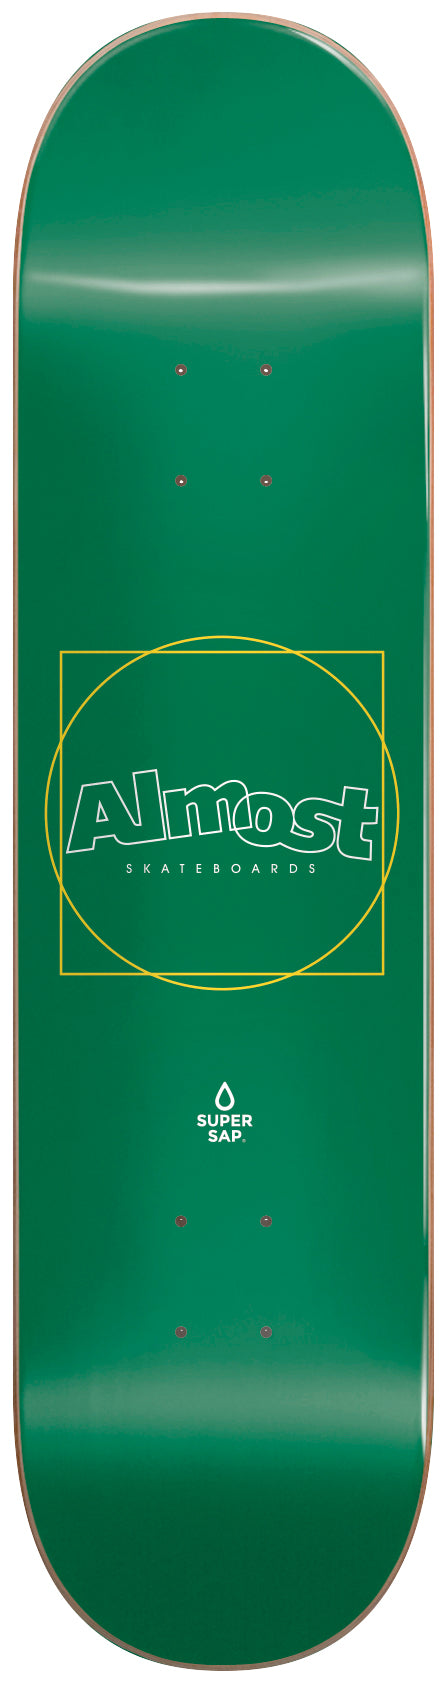 Almost - Skateboard - Deck - Greener Super Sap 8.25" (Green) Deck